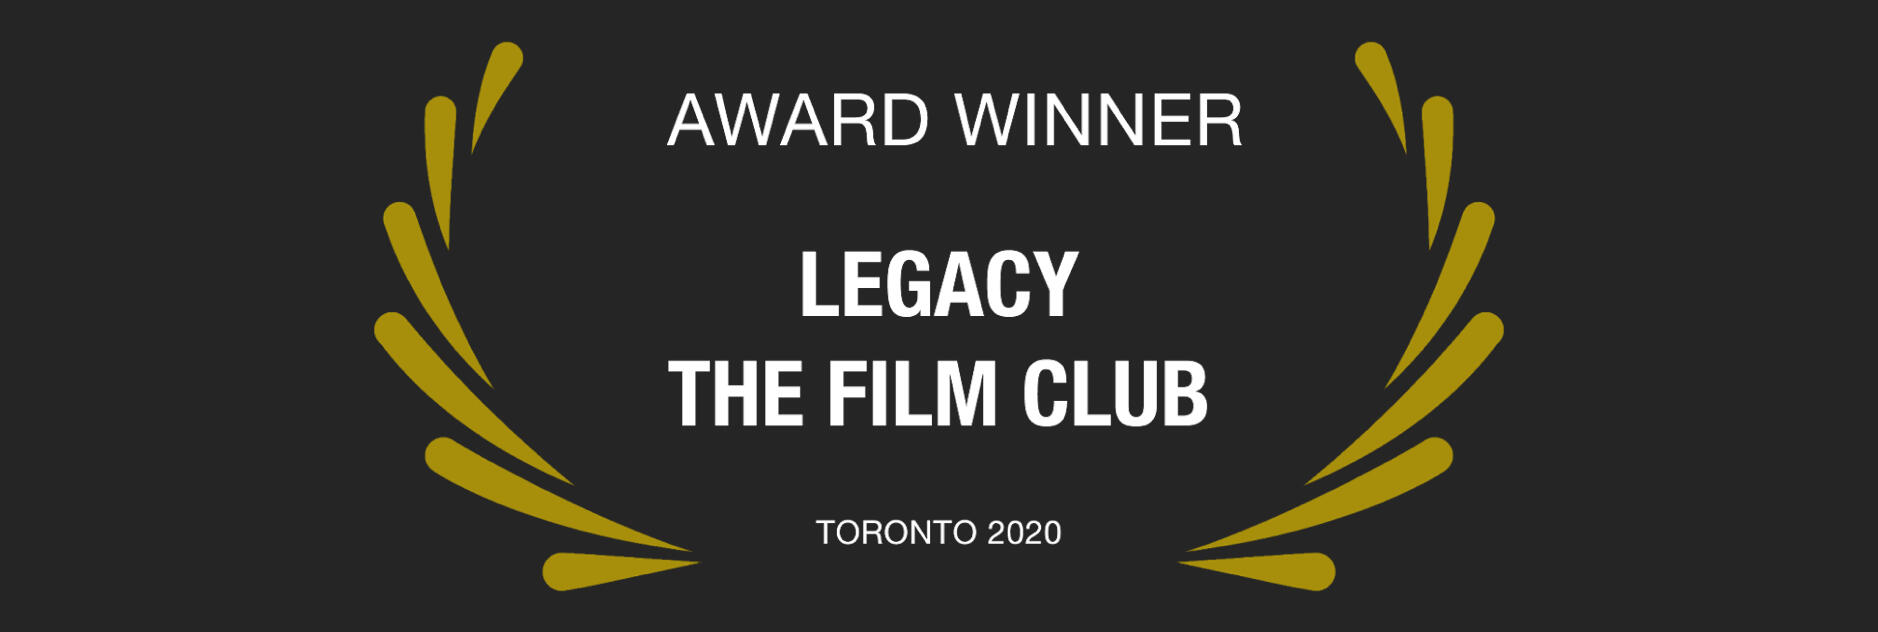 The Film Club - Toronto